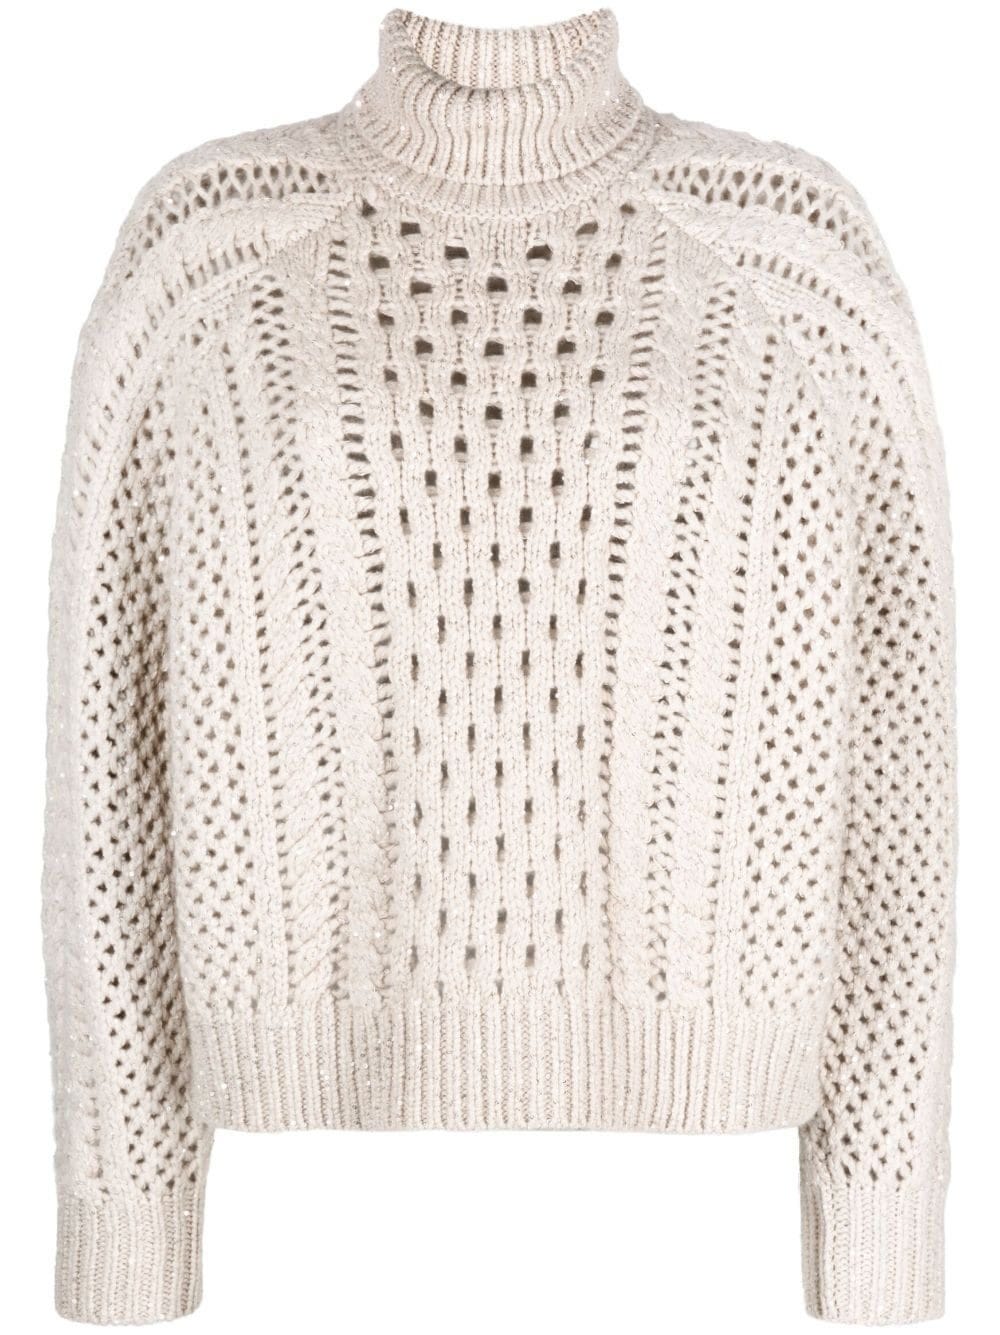 Brunello Cucinelli Crocheted Turtleneck Sweater In Beige